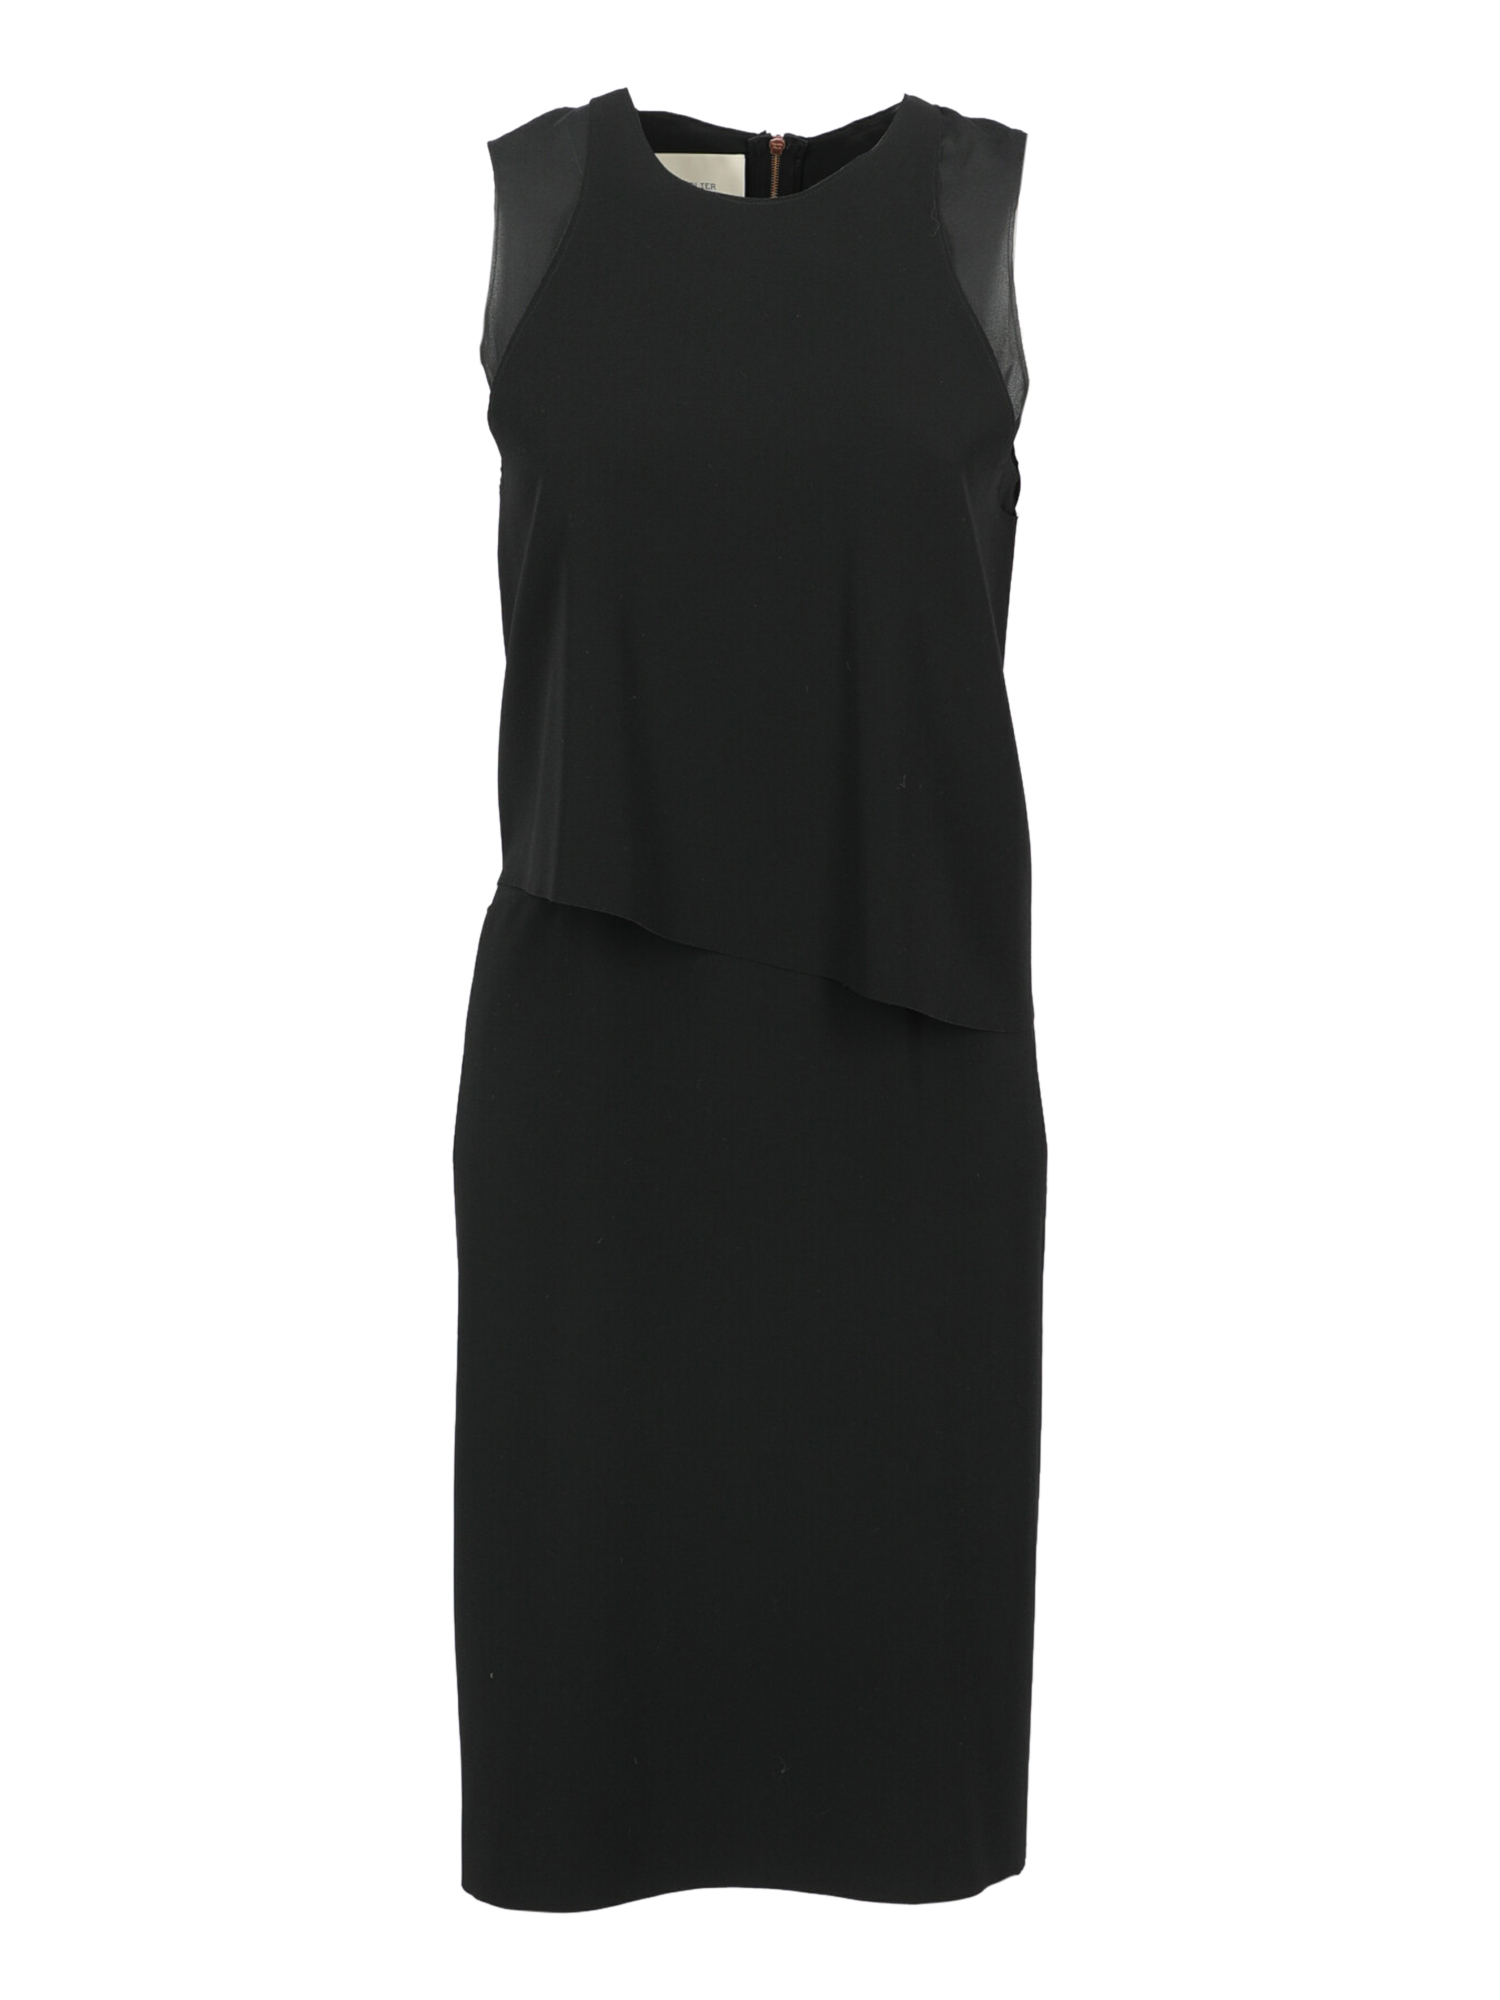 Damen Kleider -  - In Black Synthetic Fibers - Größe:  -